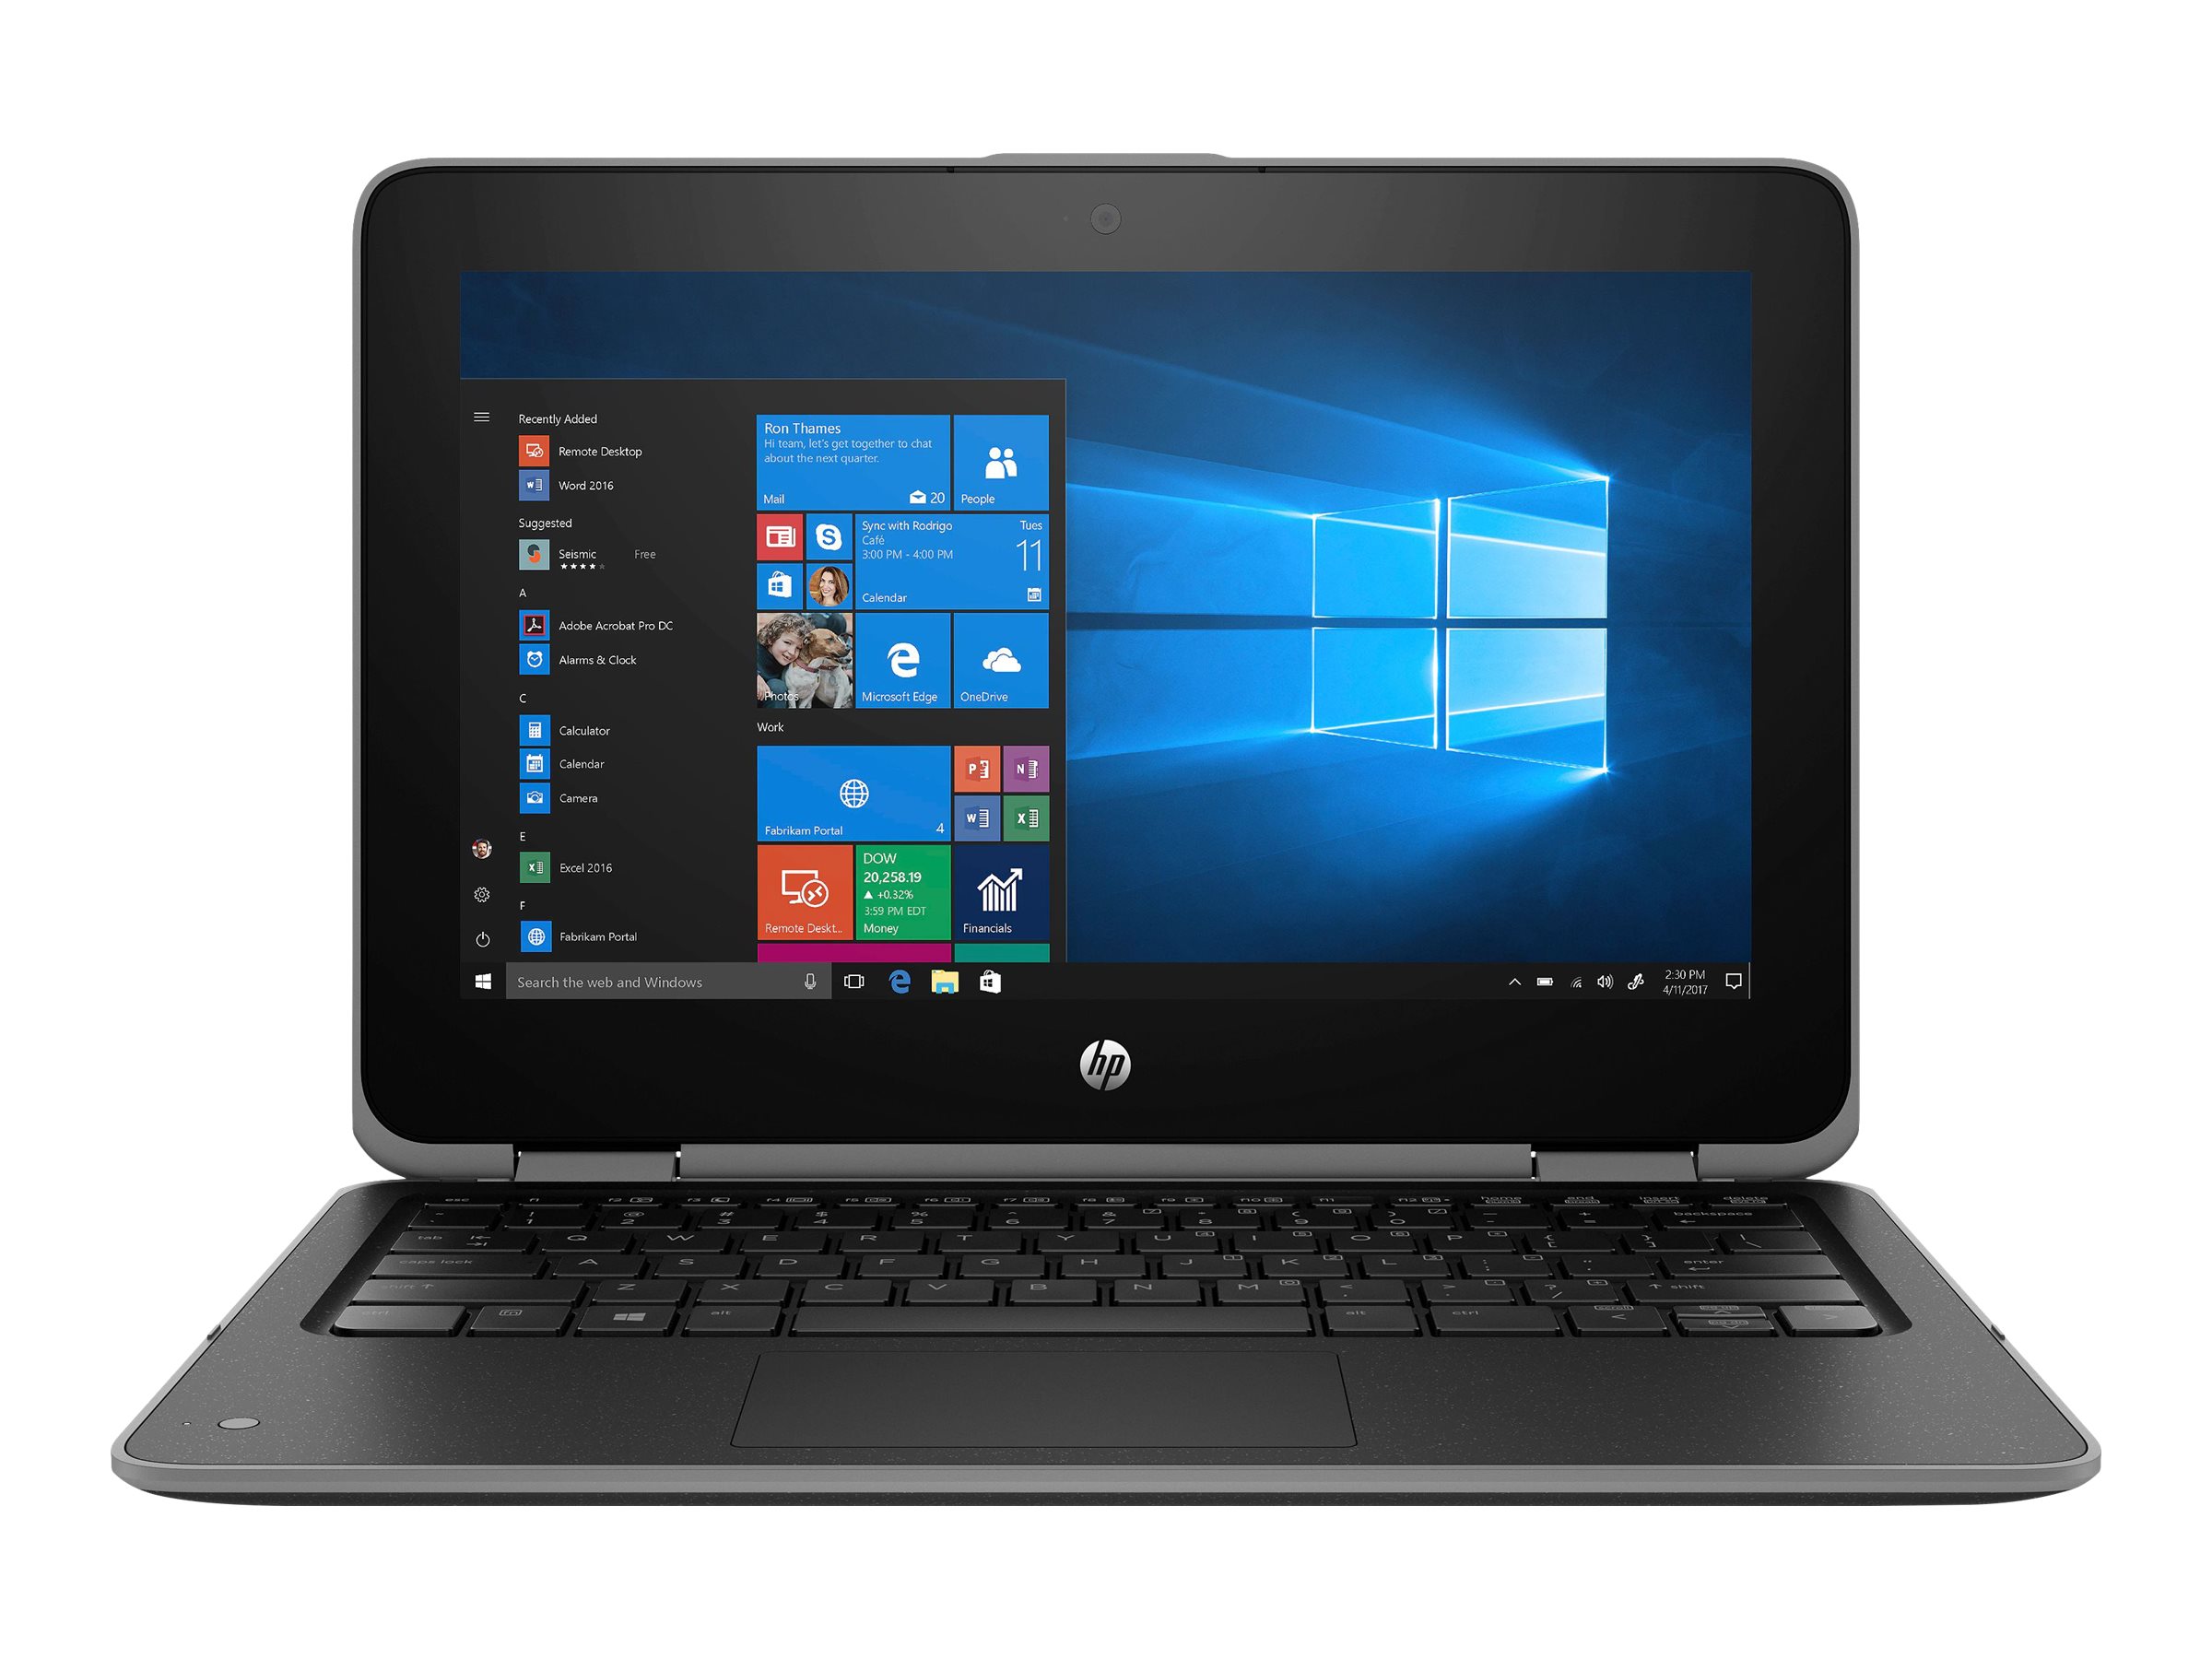 HP ProBook x360 (11 G3 Education Edition Notebook)